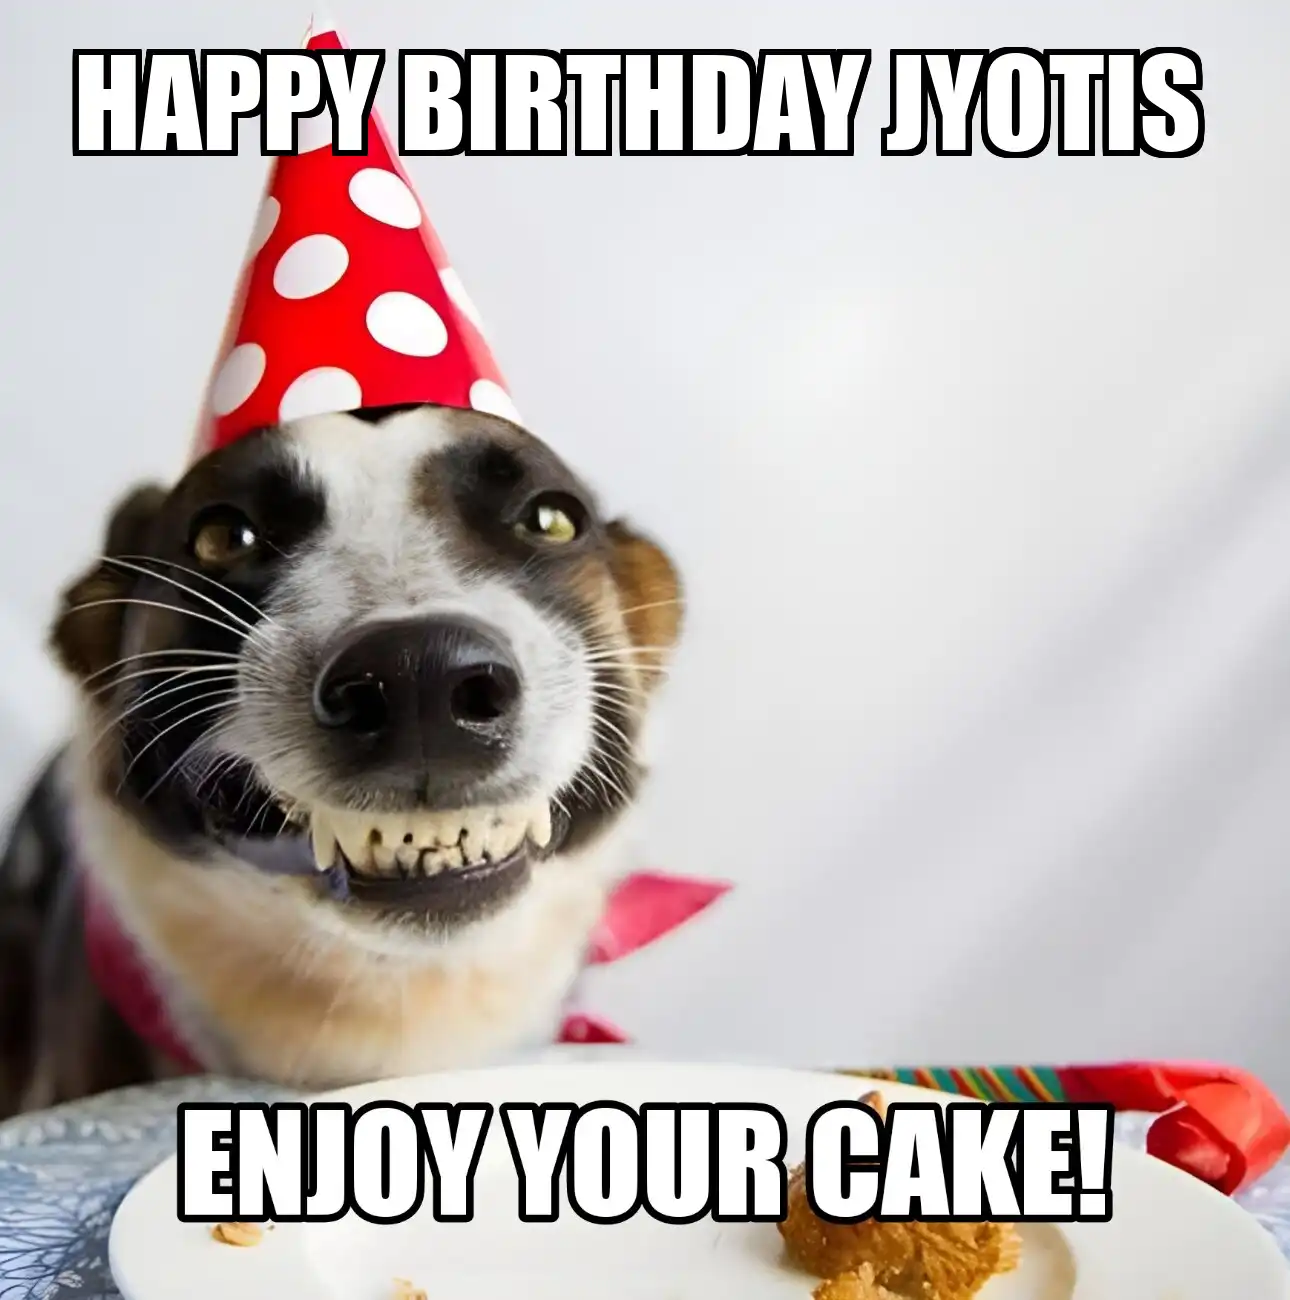 Happy Birthday Jyotis Enjoy Your Cake Dog Meme